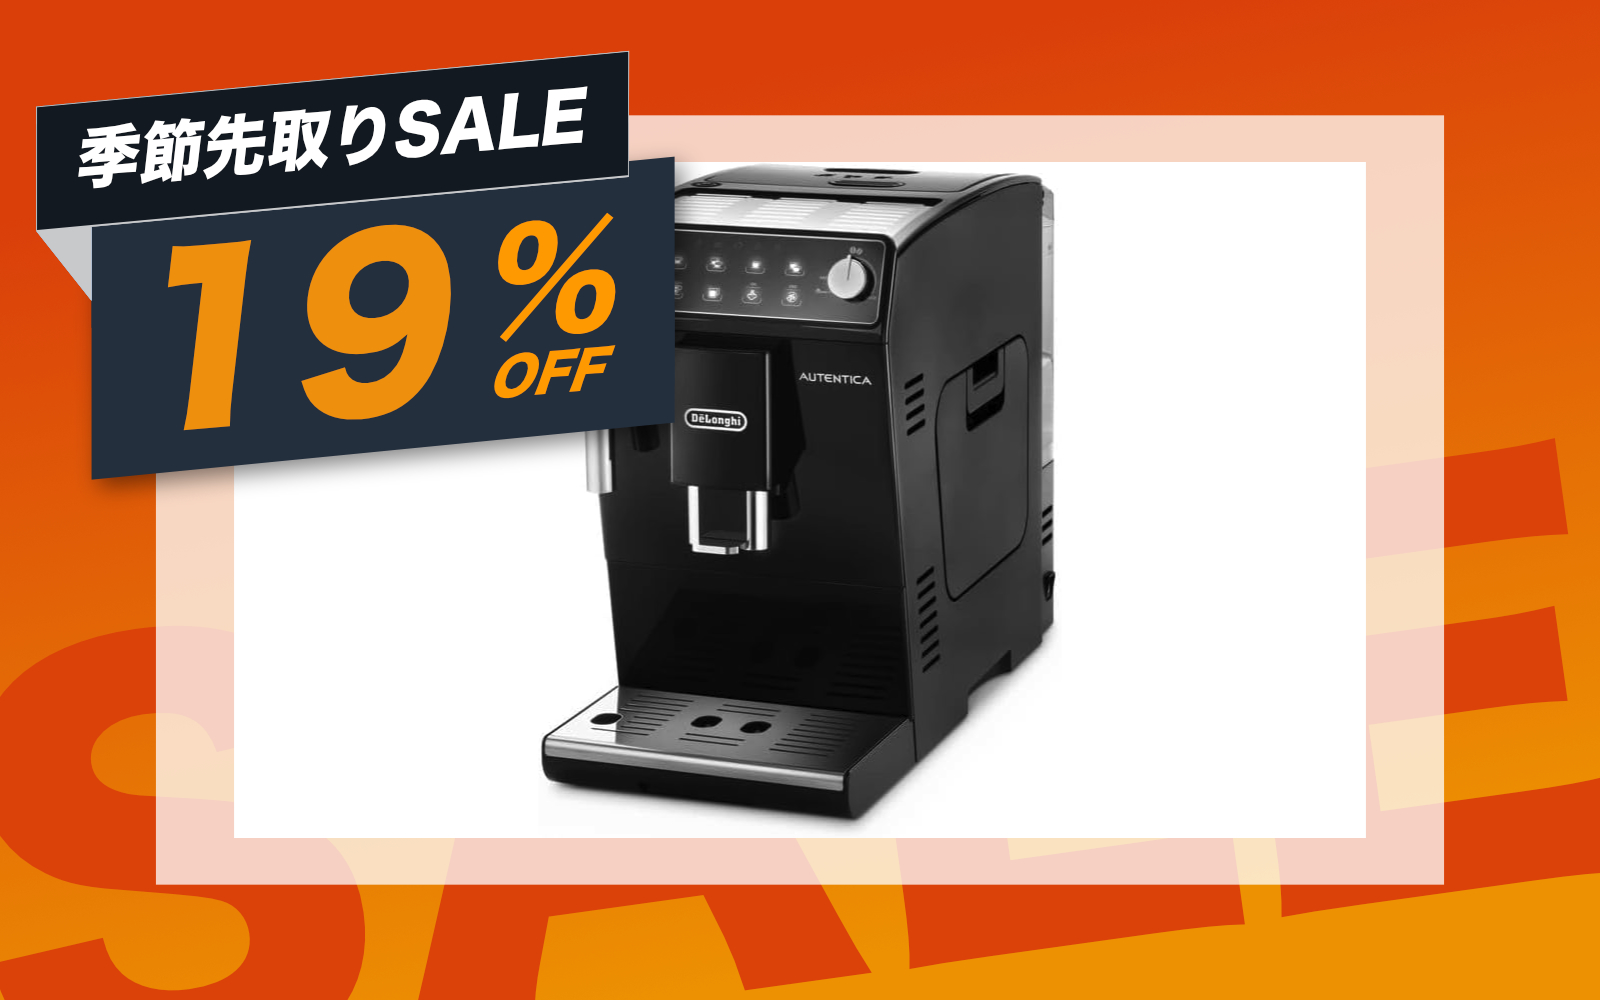 DeLonghi Entry model espresso maker on sale